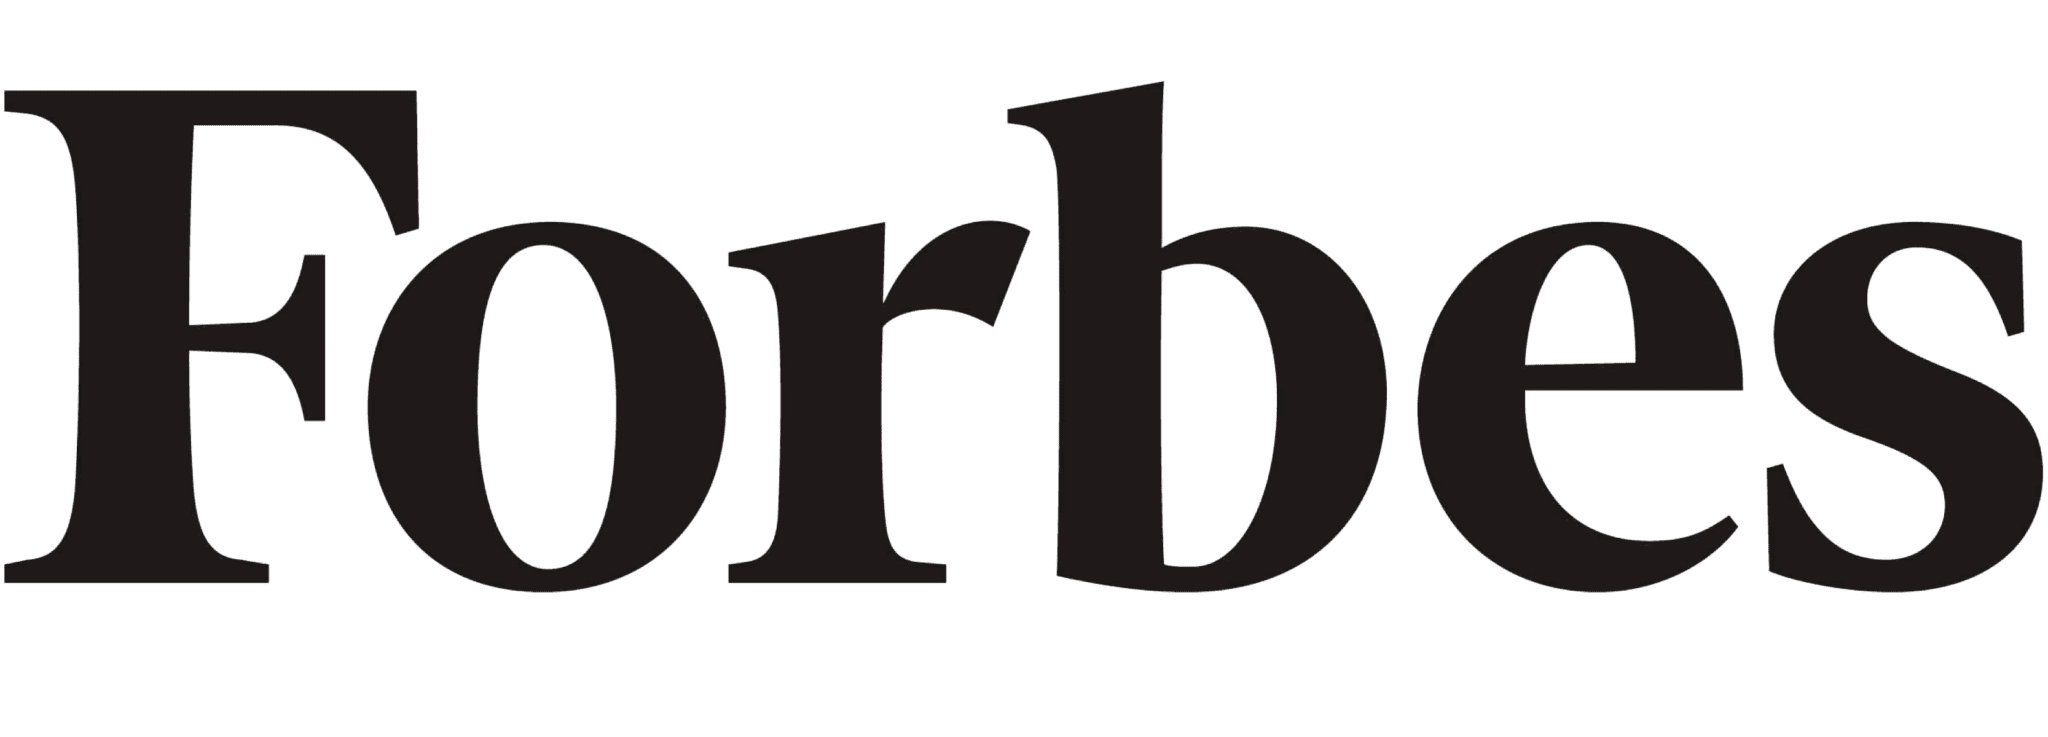 Forbes-Black-Logo-PNG-03003-2-e1517347676630